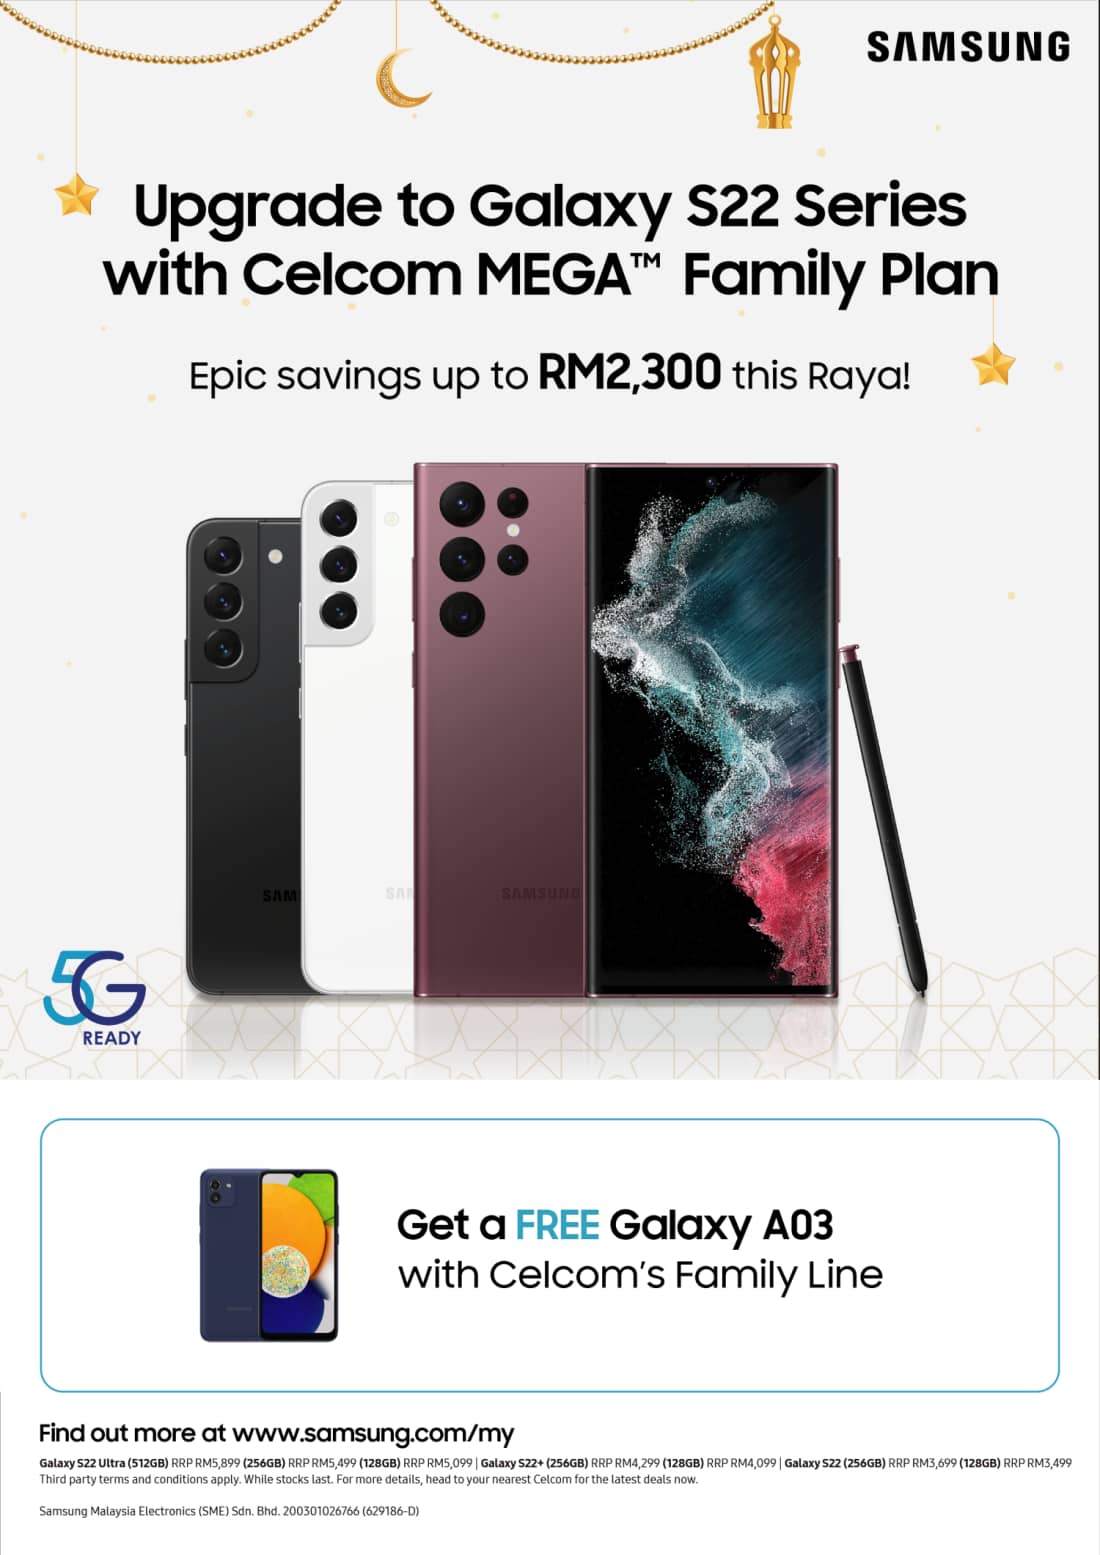 Celebrate Hari Raya With Samsung and Celcom Mega Family Plan